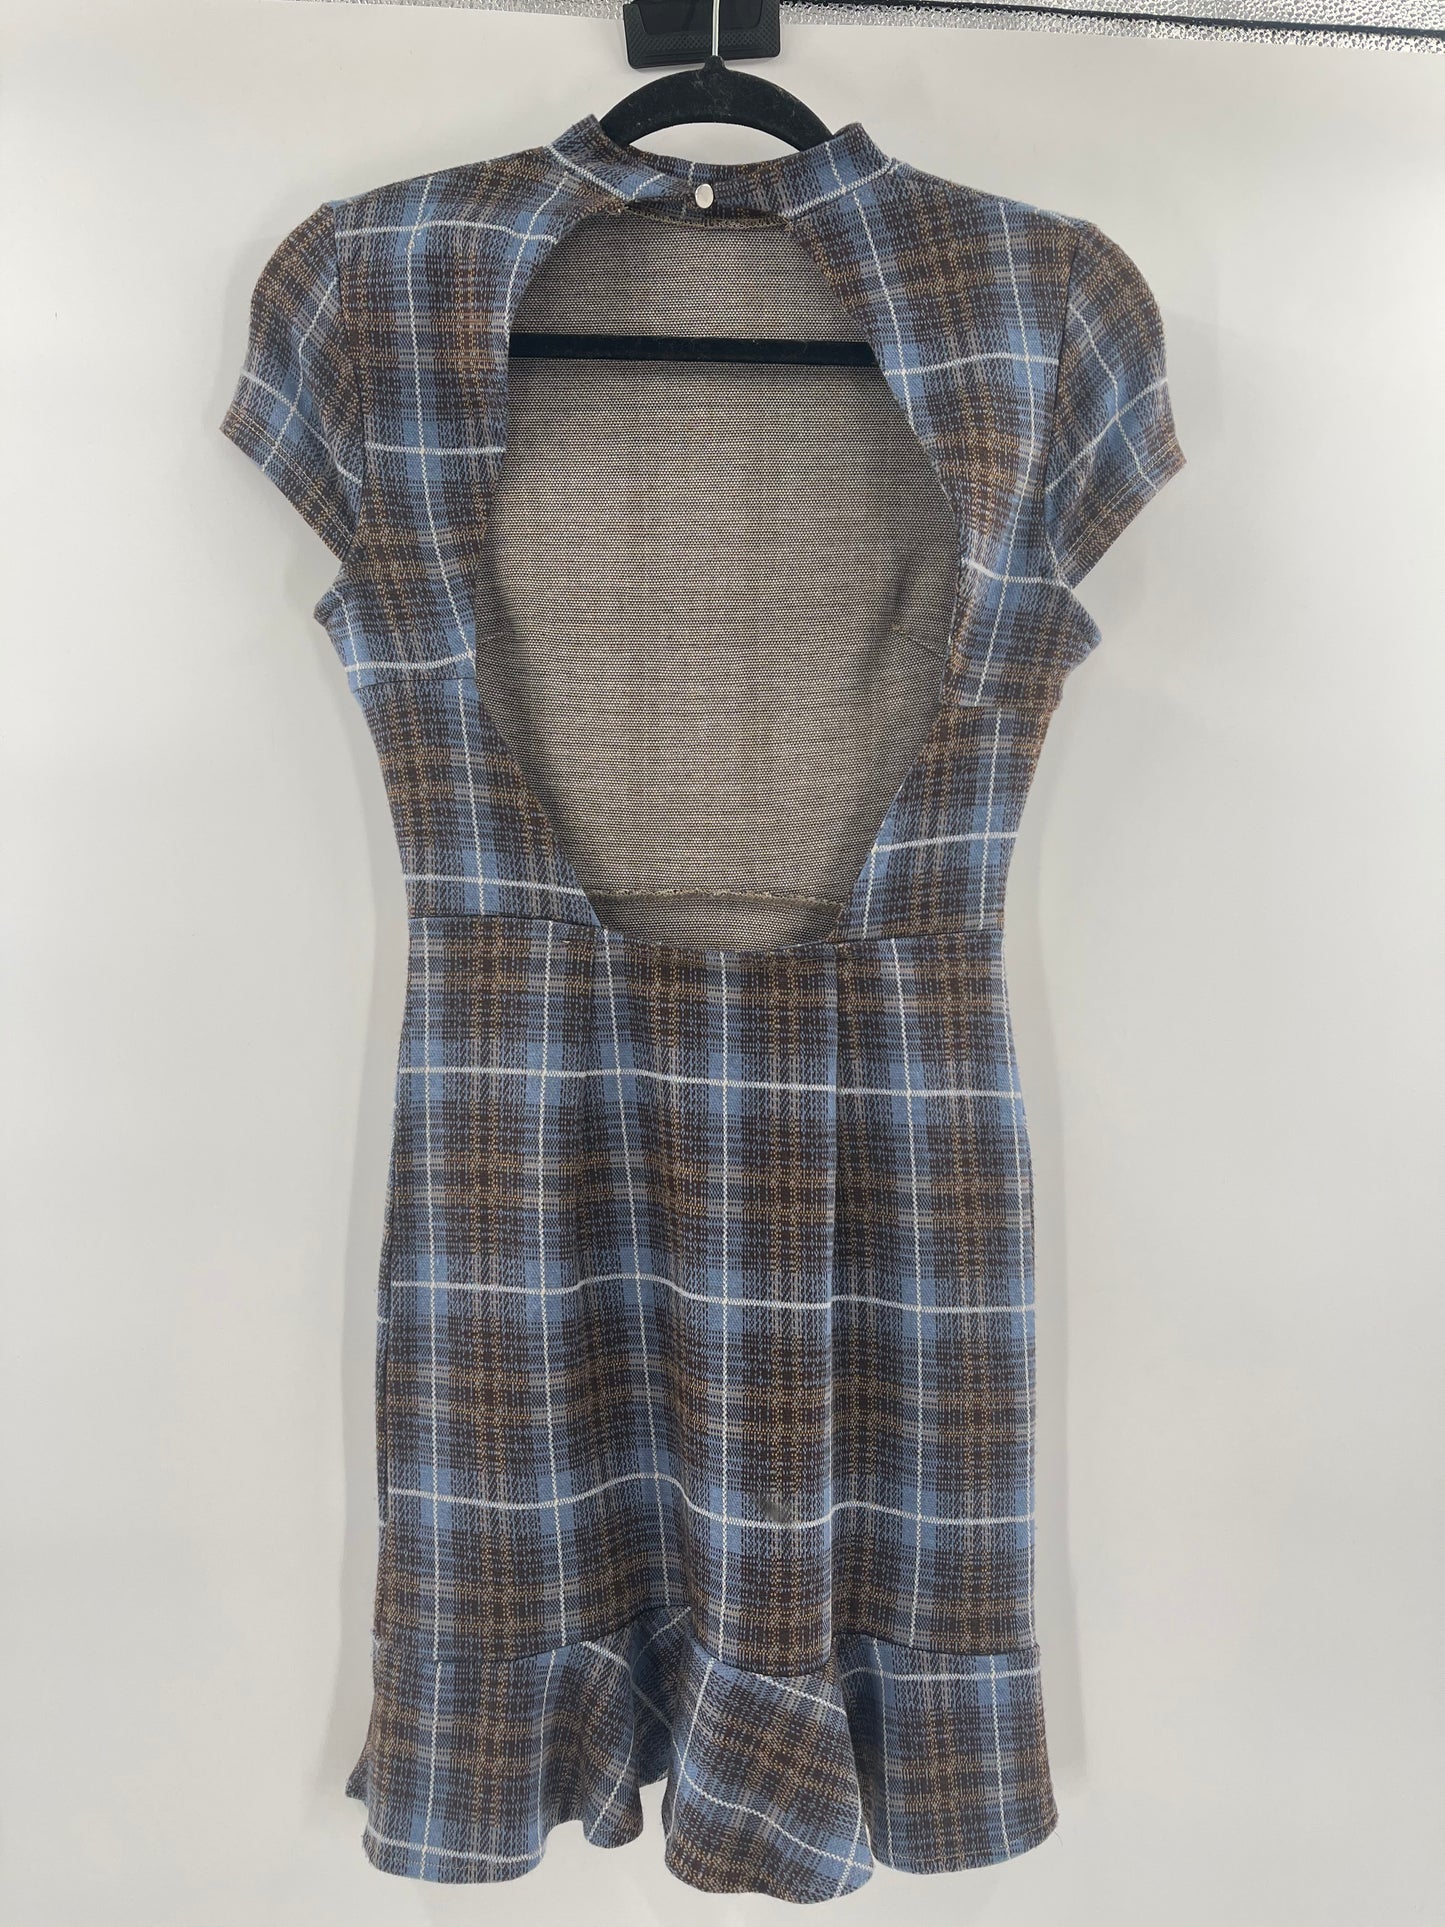 Urban Outfitters Plaid Mini Dress (Sz S)